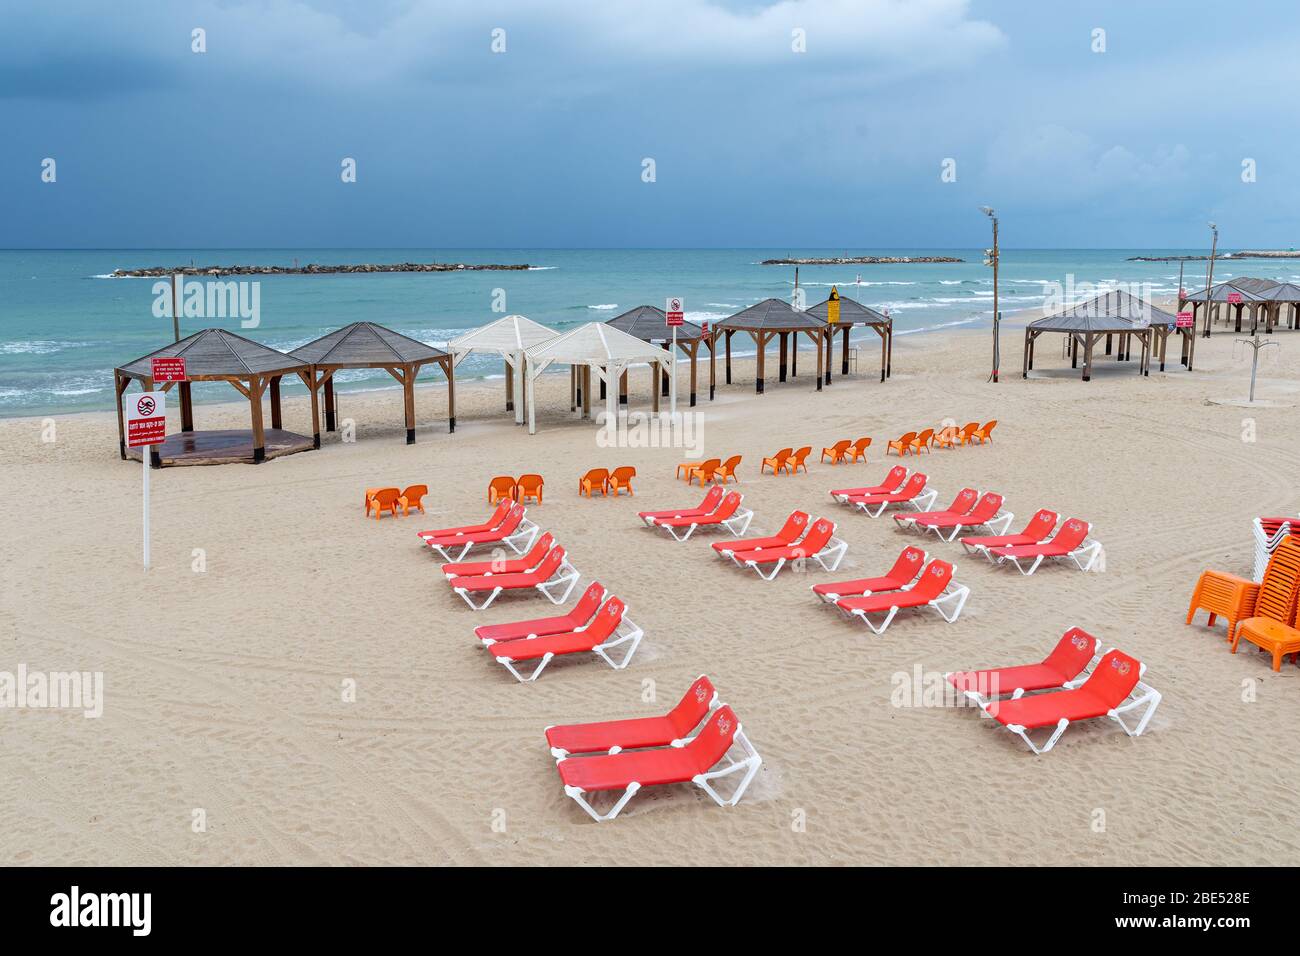 The beach of Tel Aviv on a cloudy day Stock Photo